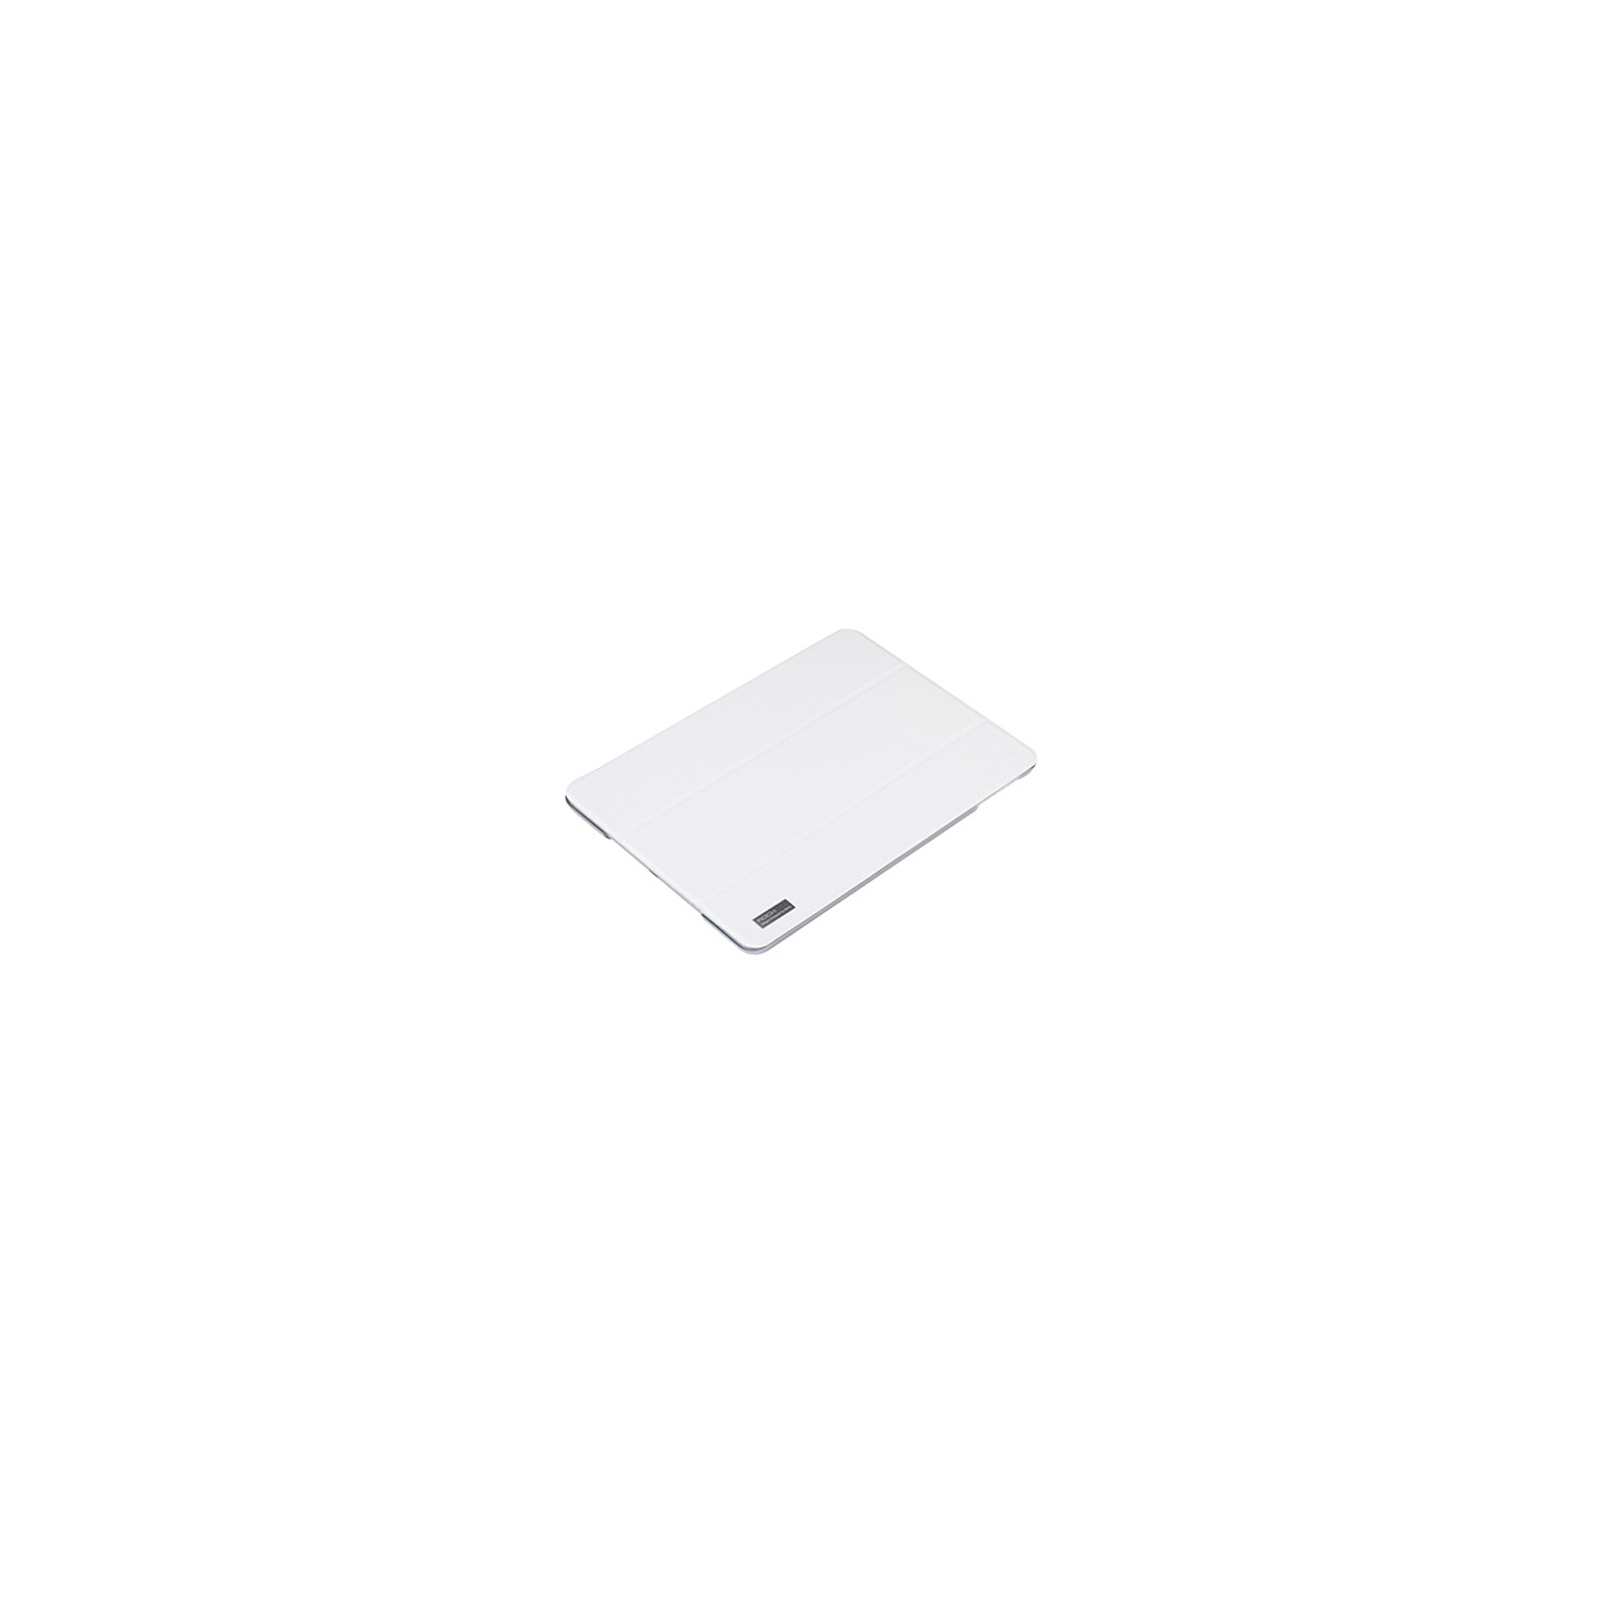 Чехол для планшета Rock new elegant series for iPad Air white (iPad Air-57467)